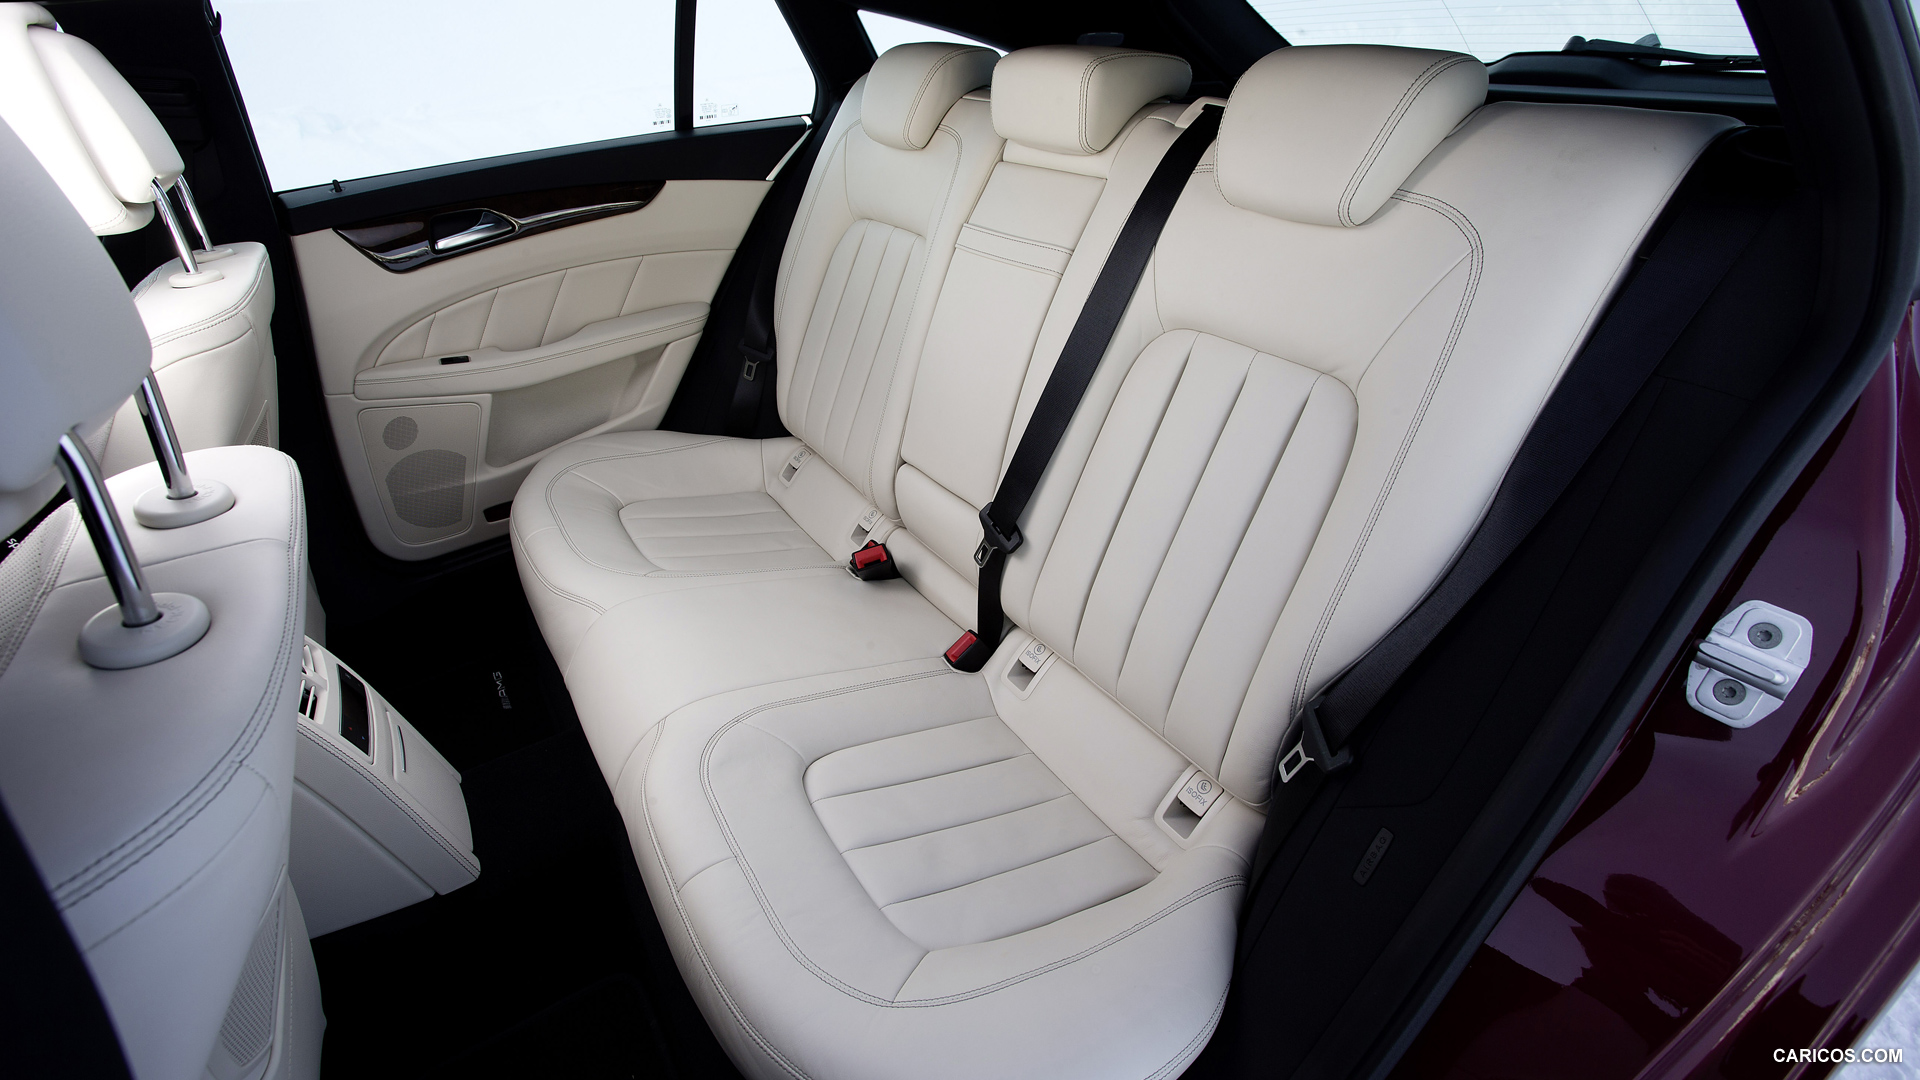 2013 Mercedes-Benz CLS 500 4MATIC Shooting Brake  - Interior Rear Seats, #177 of 184